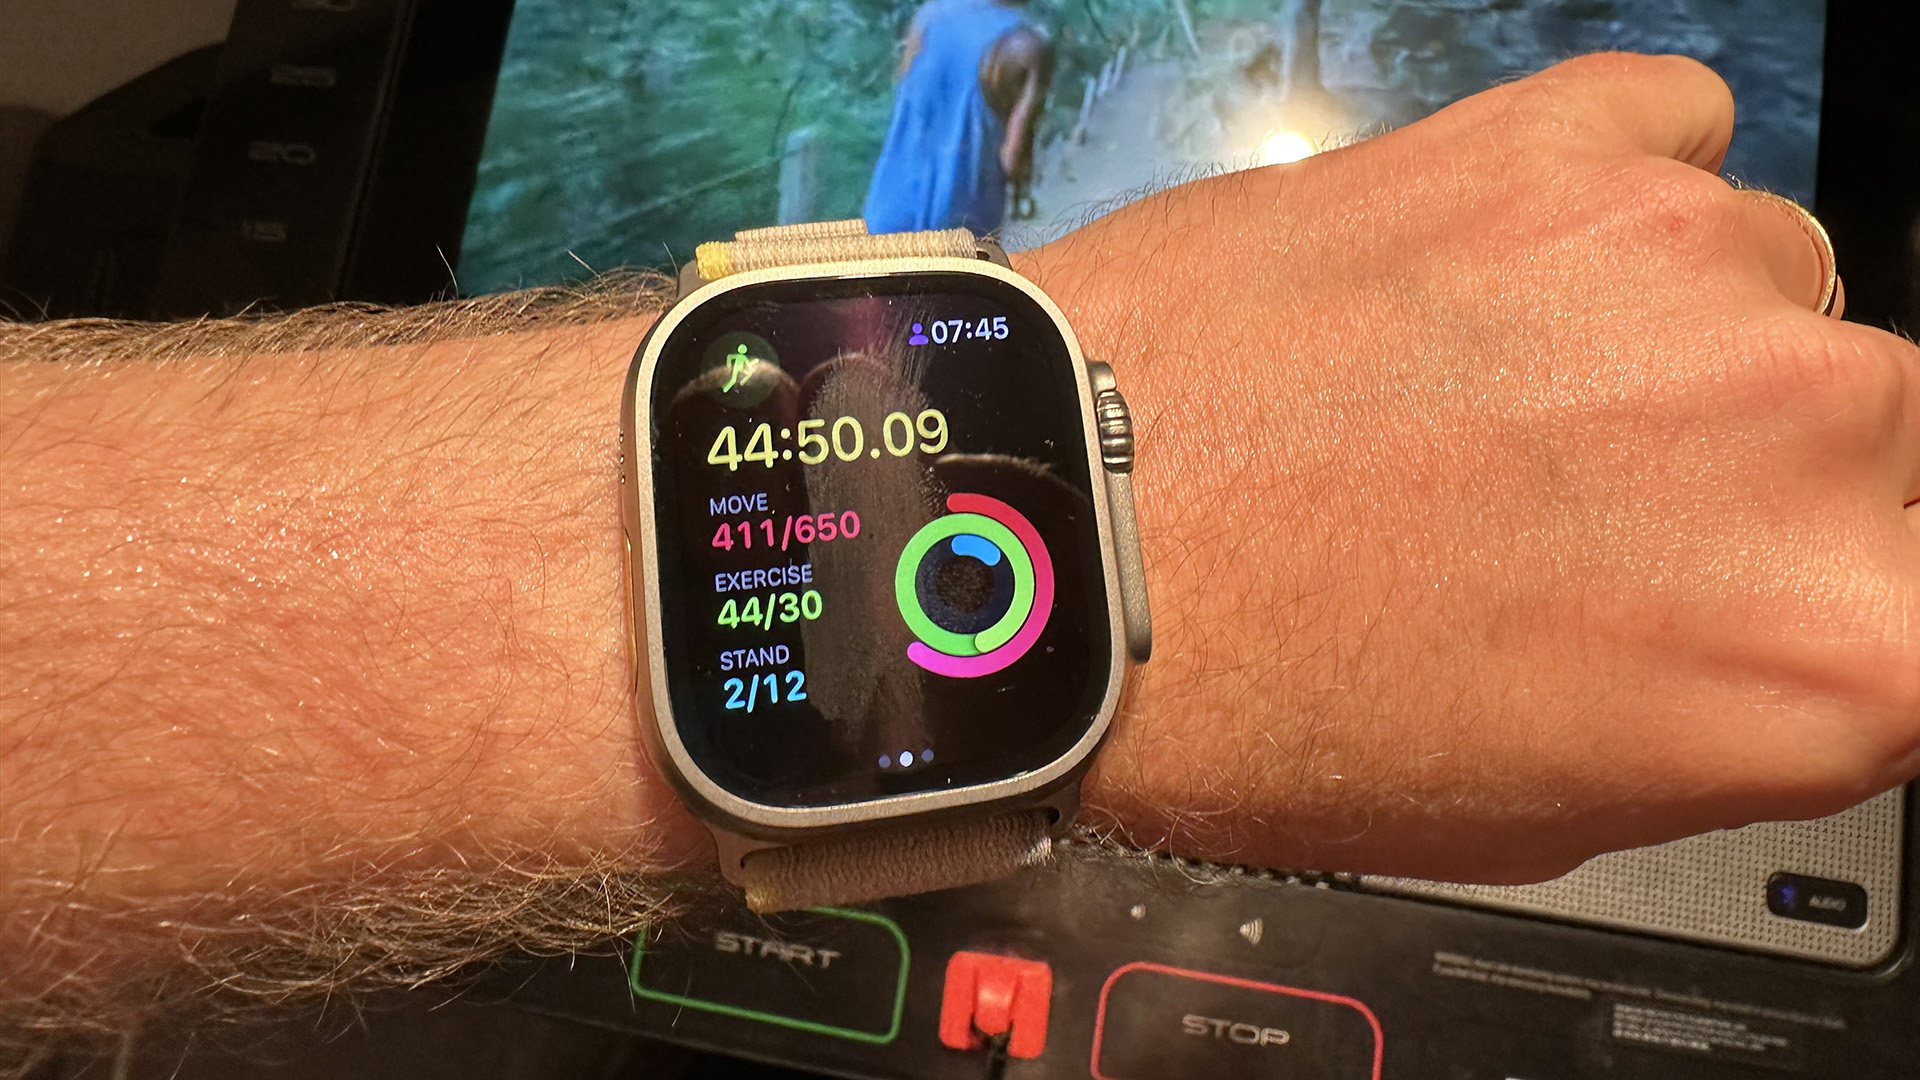 Apple Watch Ultra workout mode